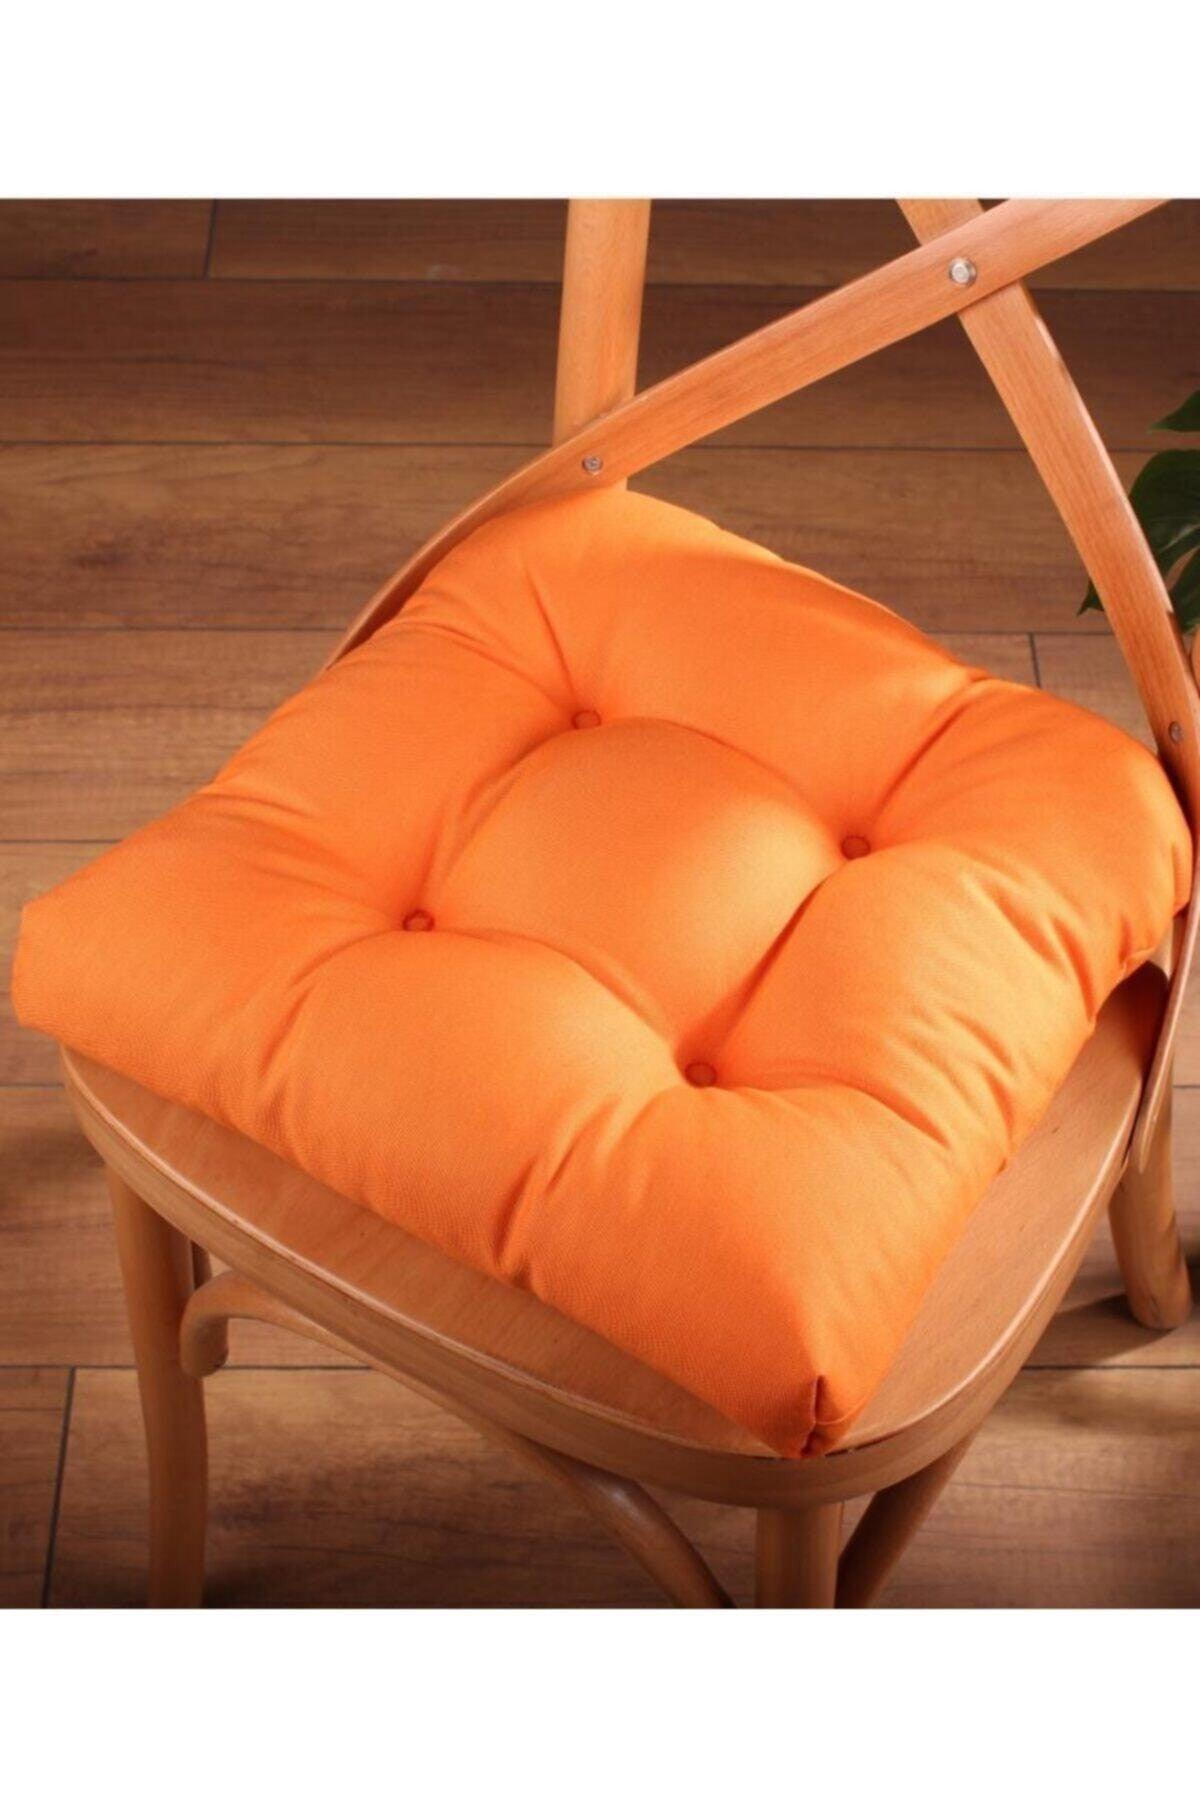 Pofidik Orange Chair Cushion Special Stitched Laced 40x40cm - Swordslife